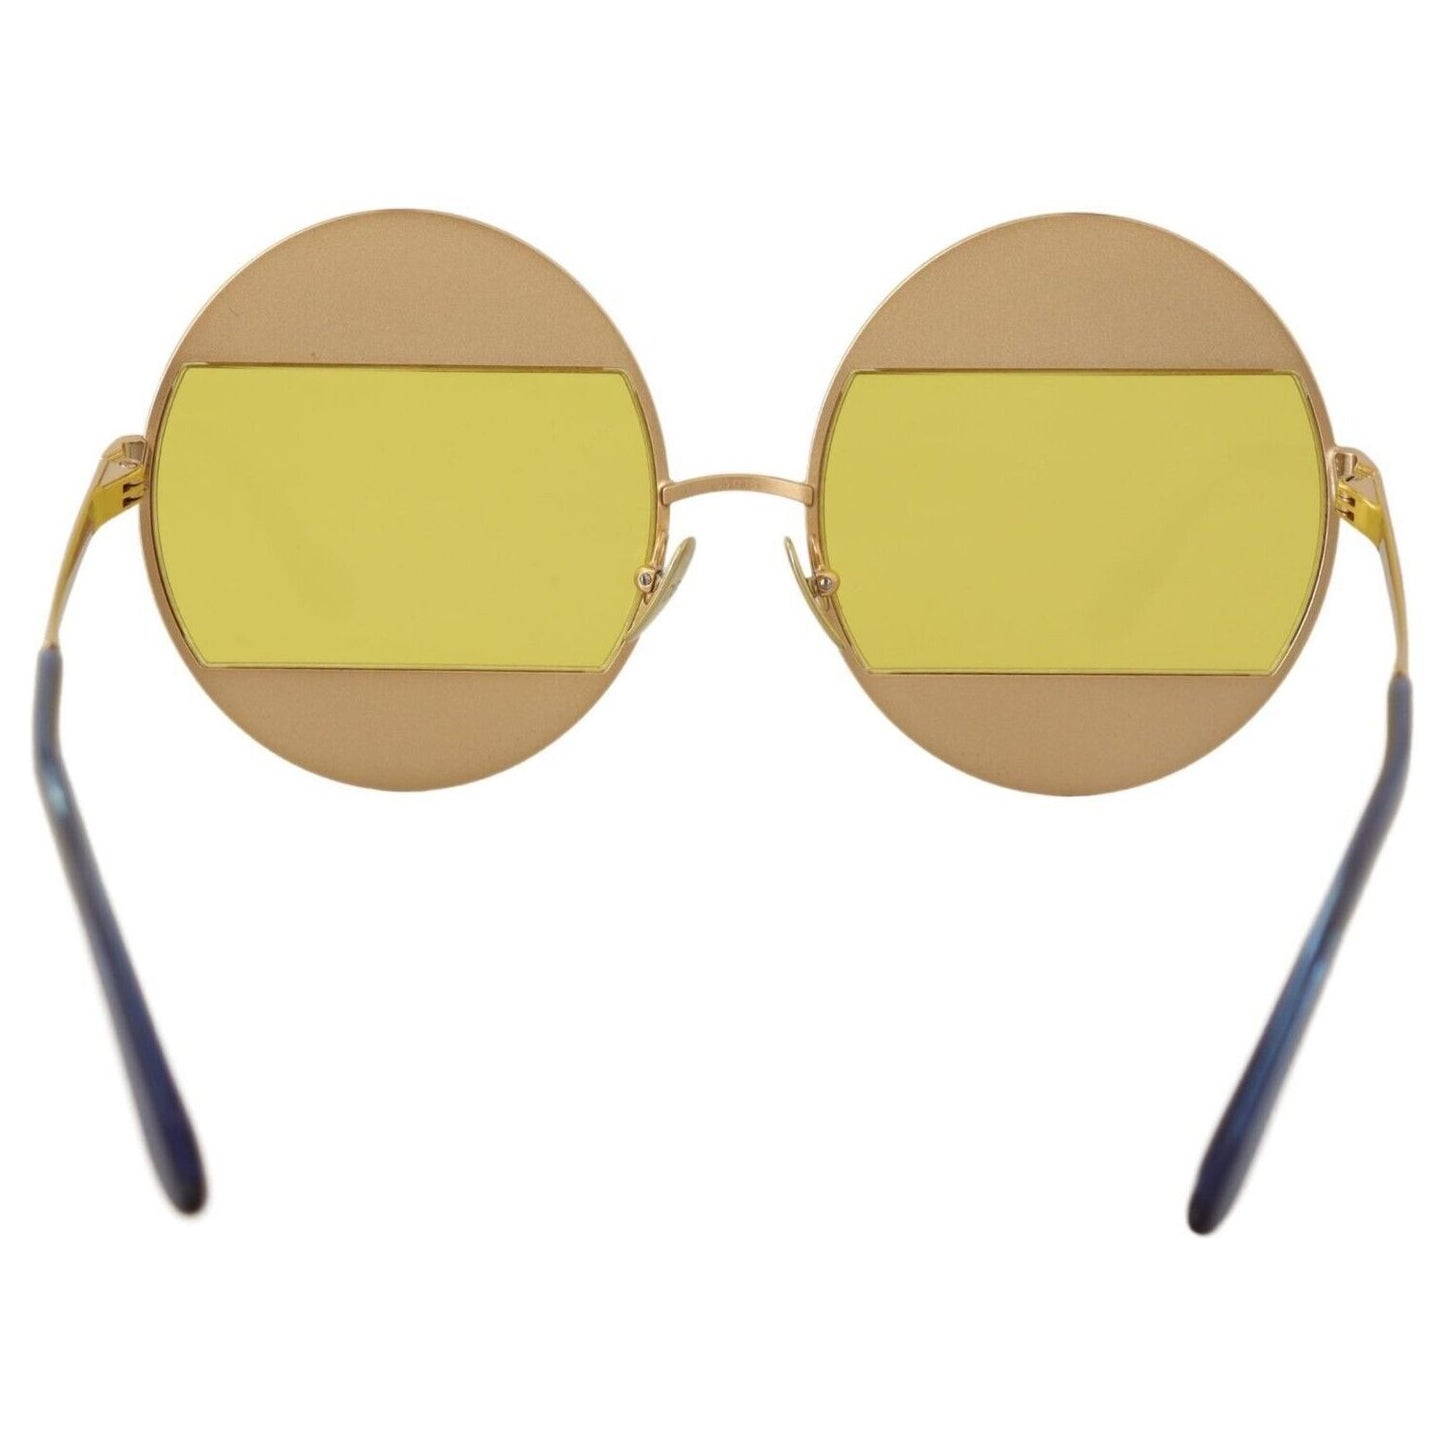 Dolce & Gabbana Crystal Embellished Oval Sunglasses WOMAN SUNGLASSES gold-oval-metal-crystals-shades-sunglasses s-l1600-2-38-a862fc37-01e.jpg